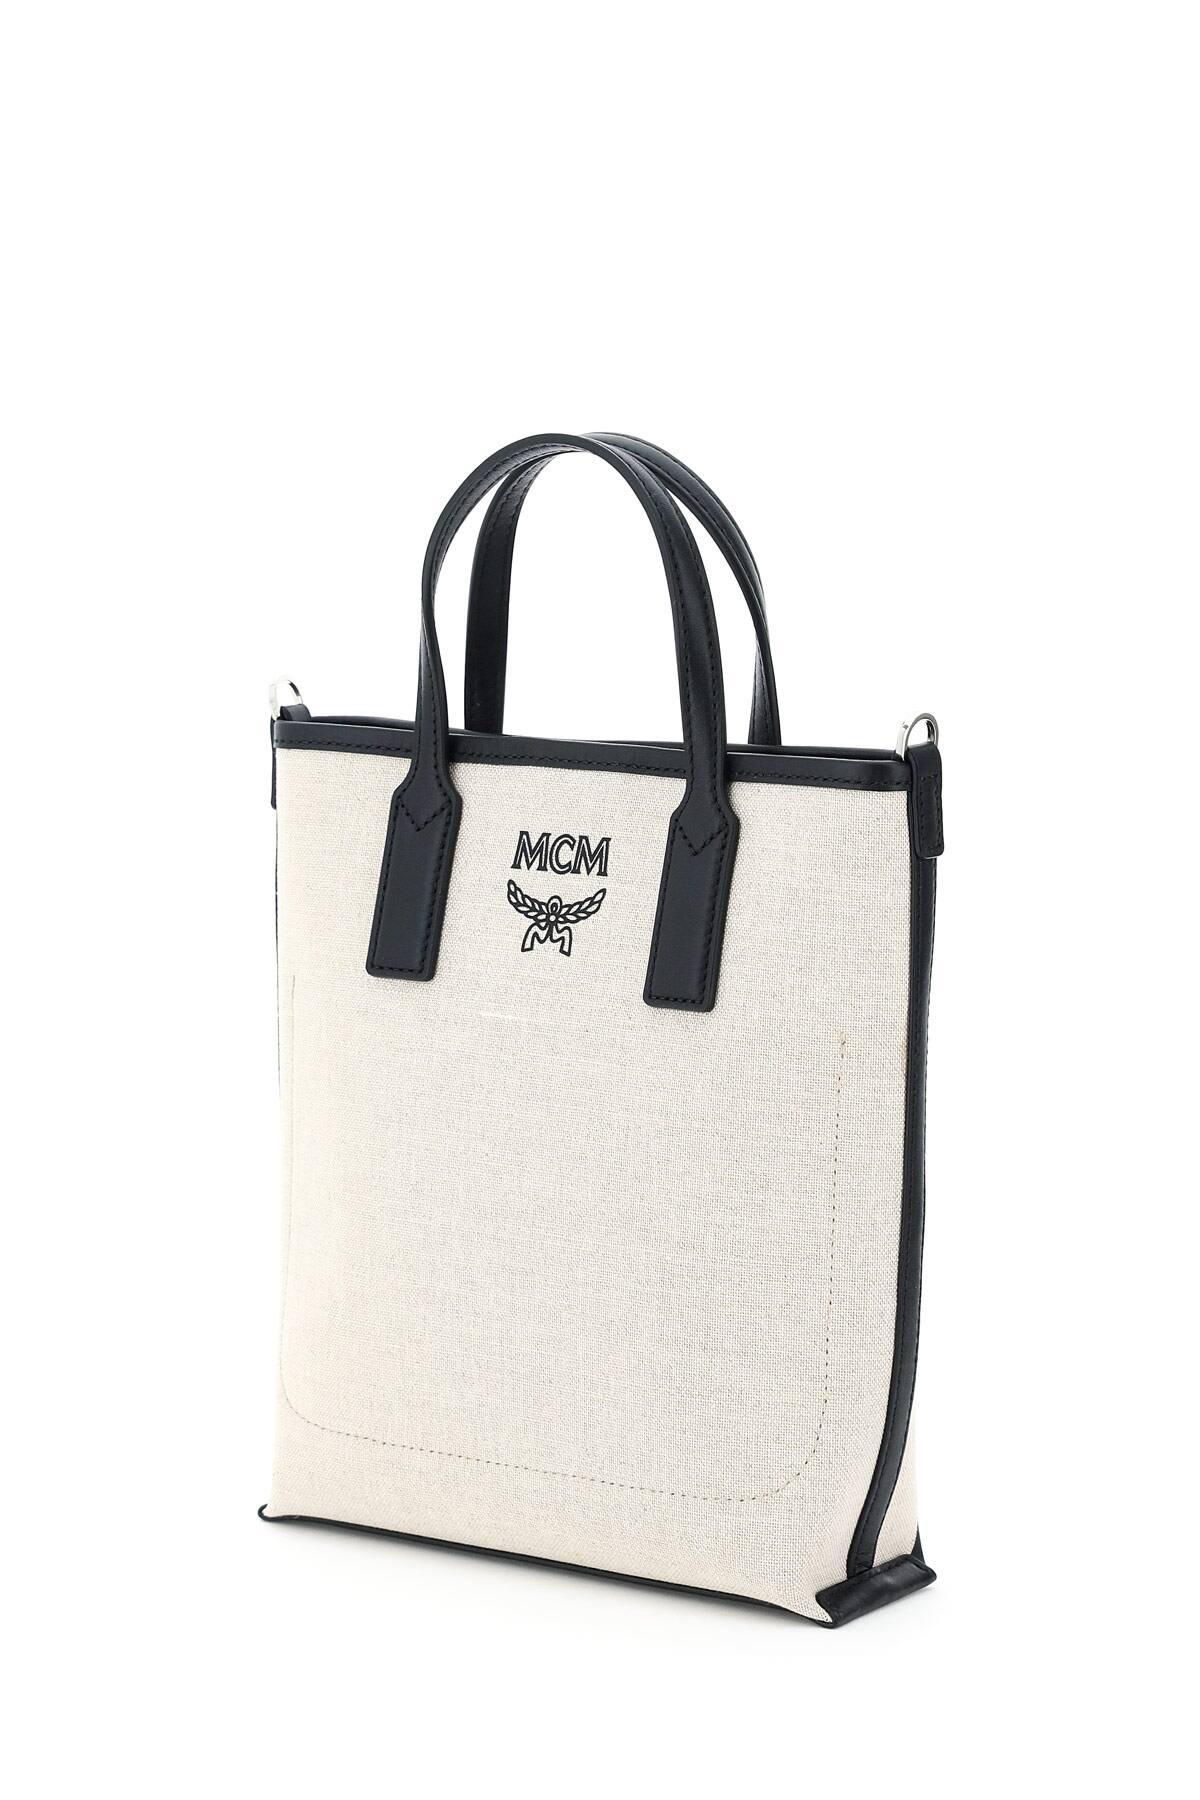 MCM Mini Canvas Tote Bag With Logo in Beige,Black (Black) | Lyst